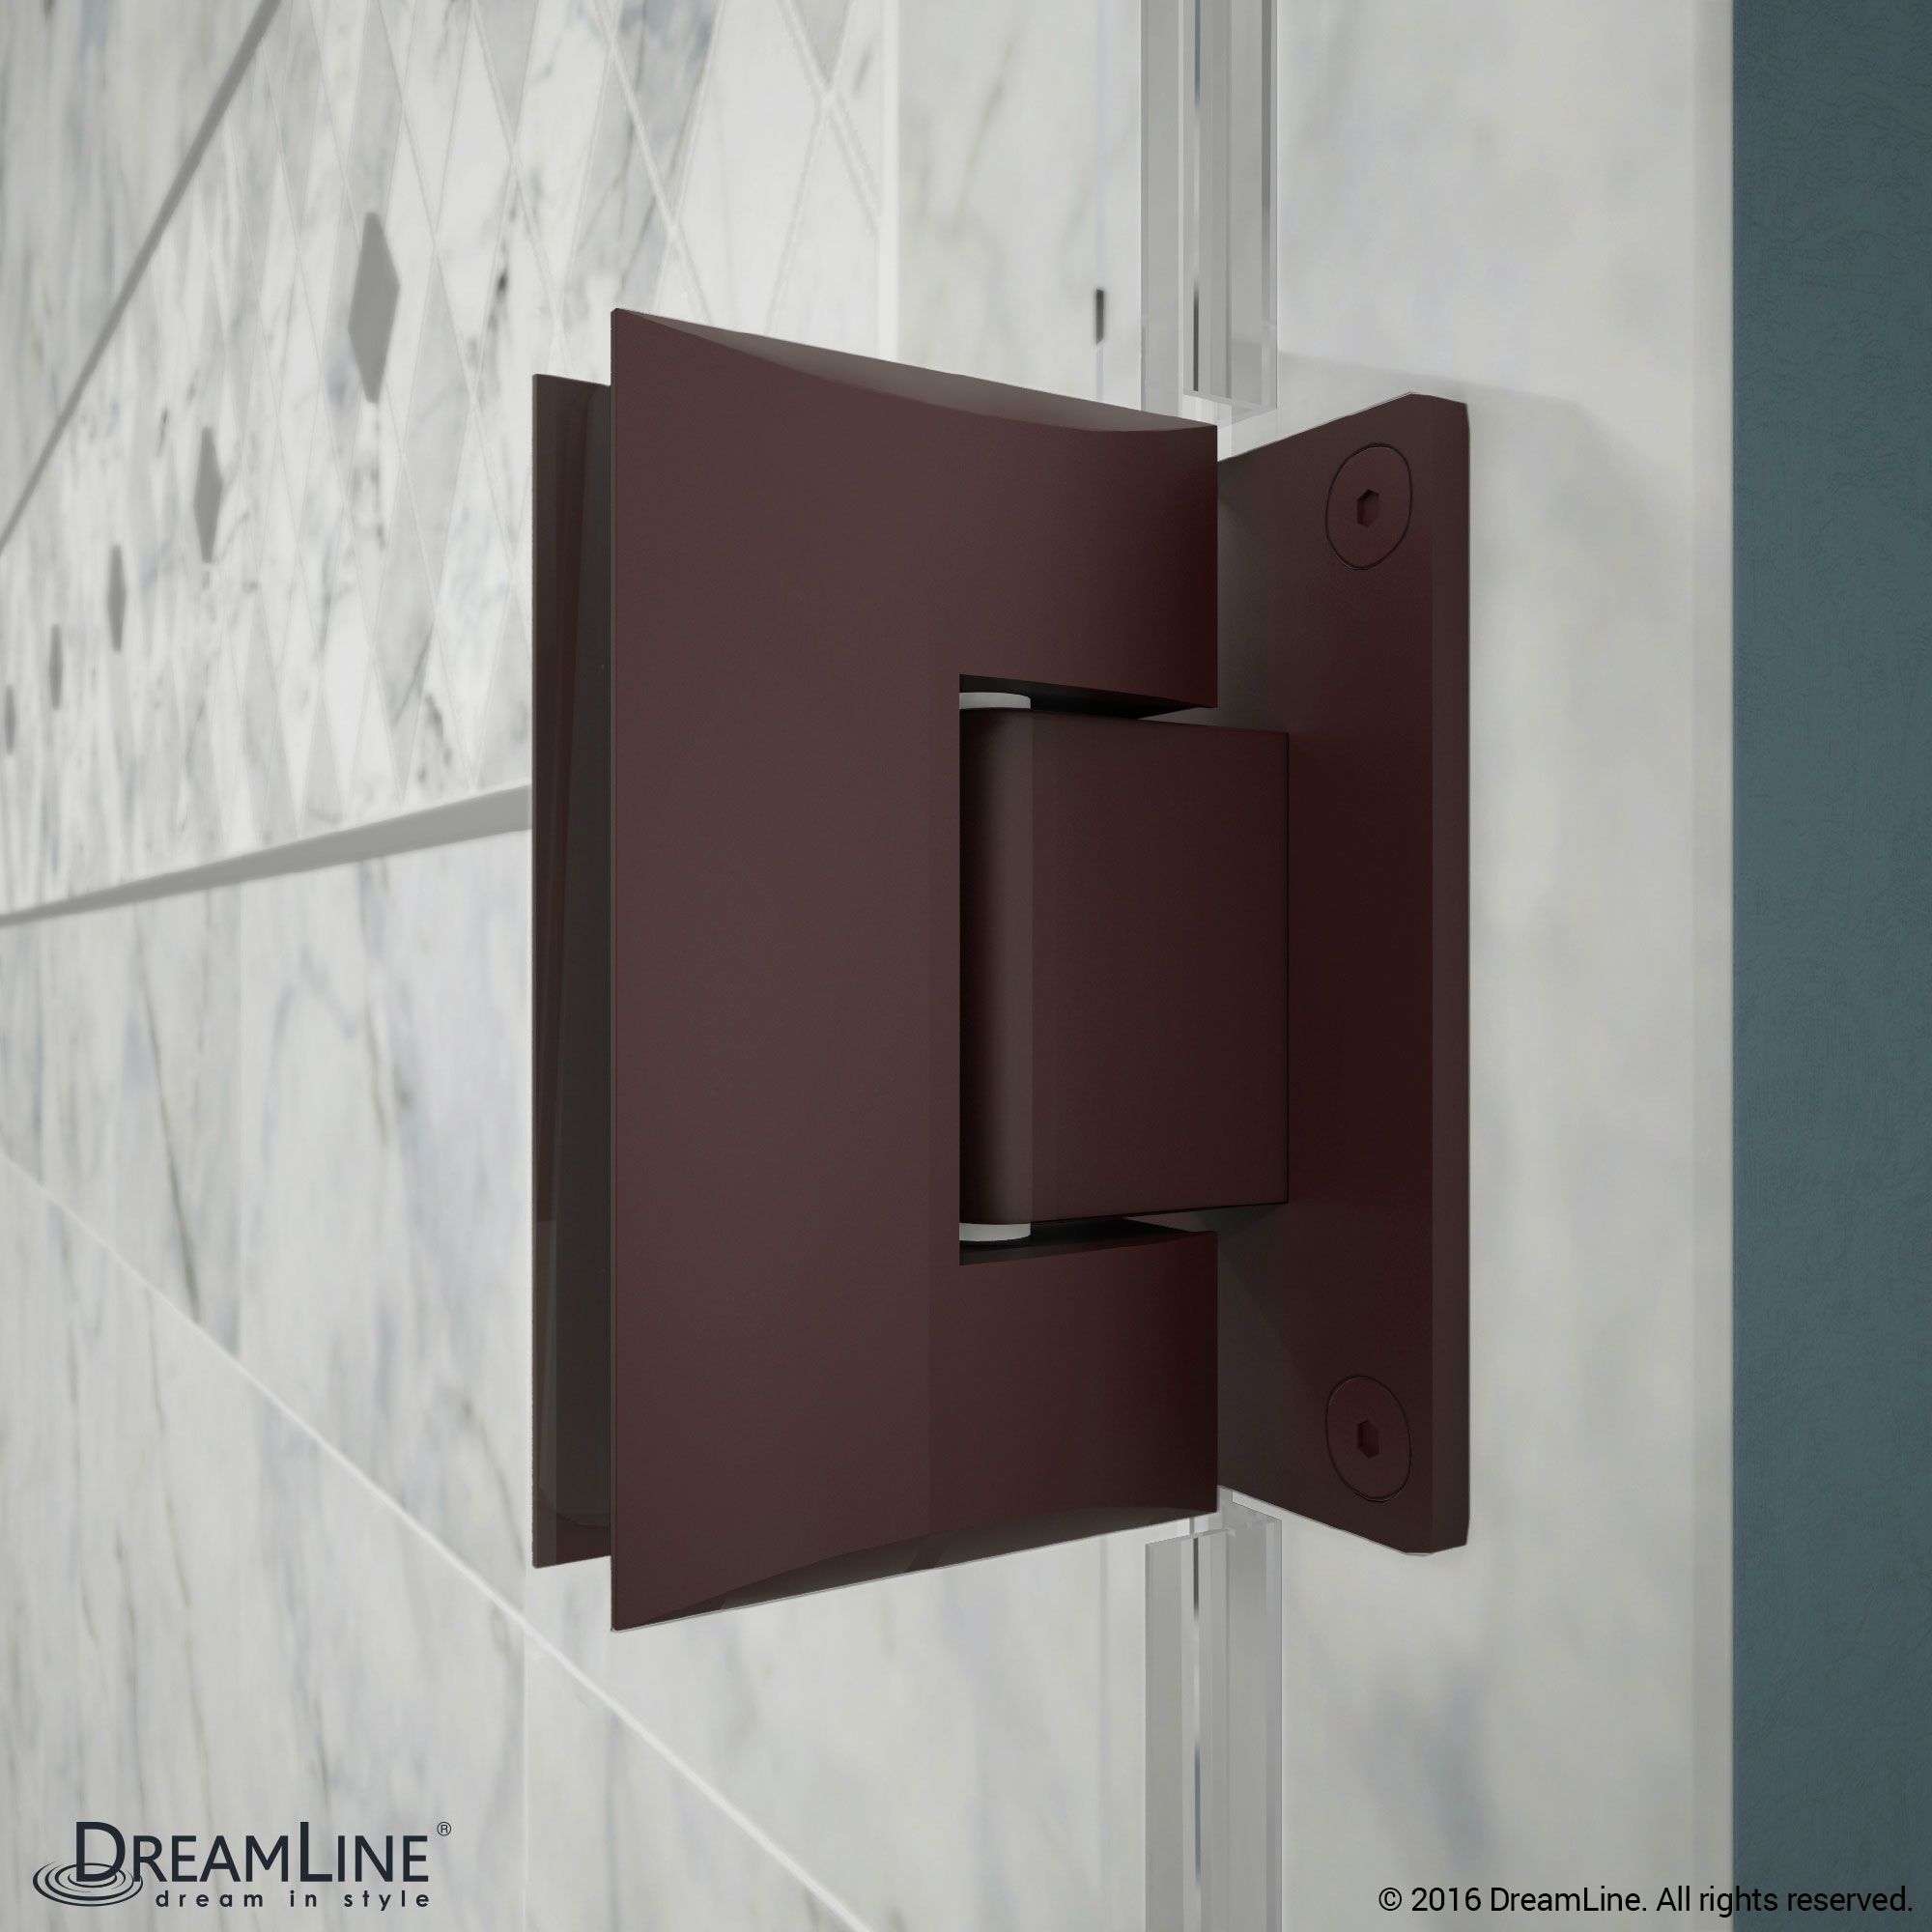 DreamLine SHEN-24465300-06 Unidoor Plus Hinged Shower Enclosure In Oil Rubbed Bronze Finish Hardware